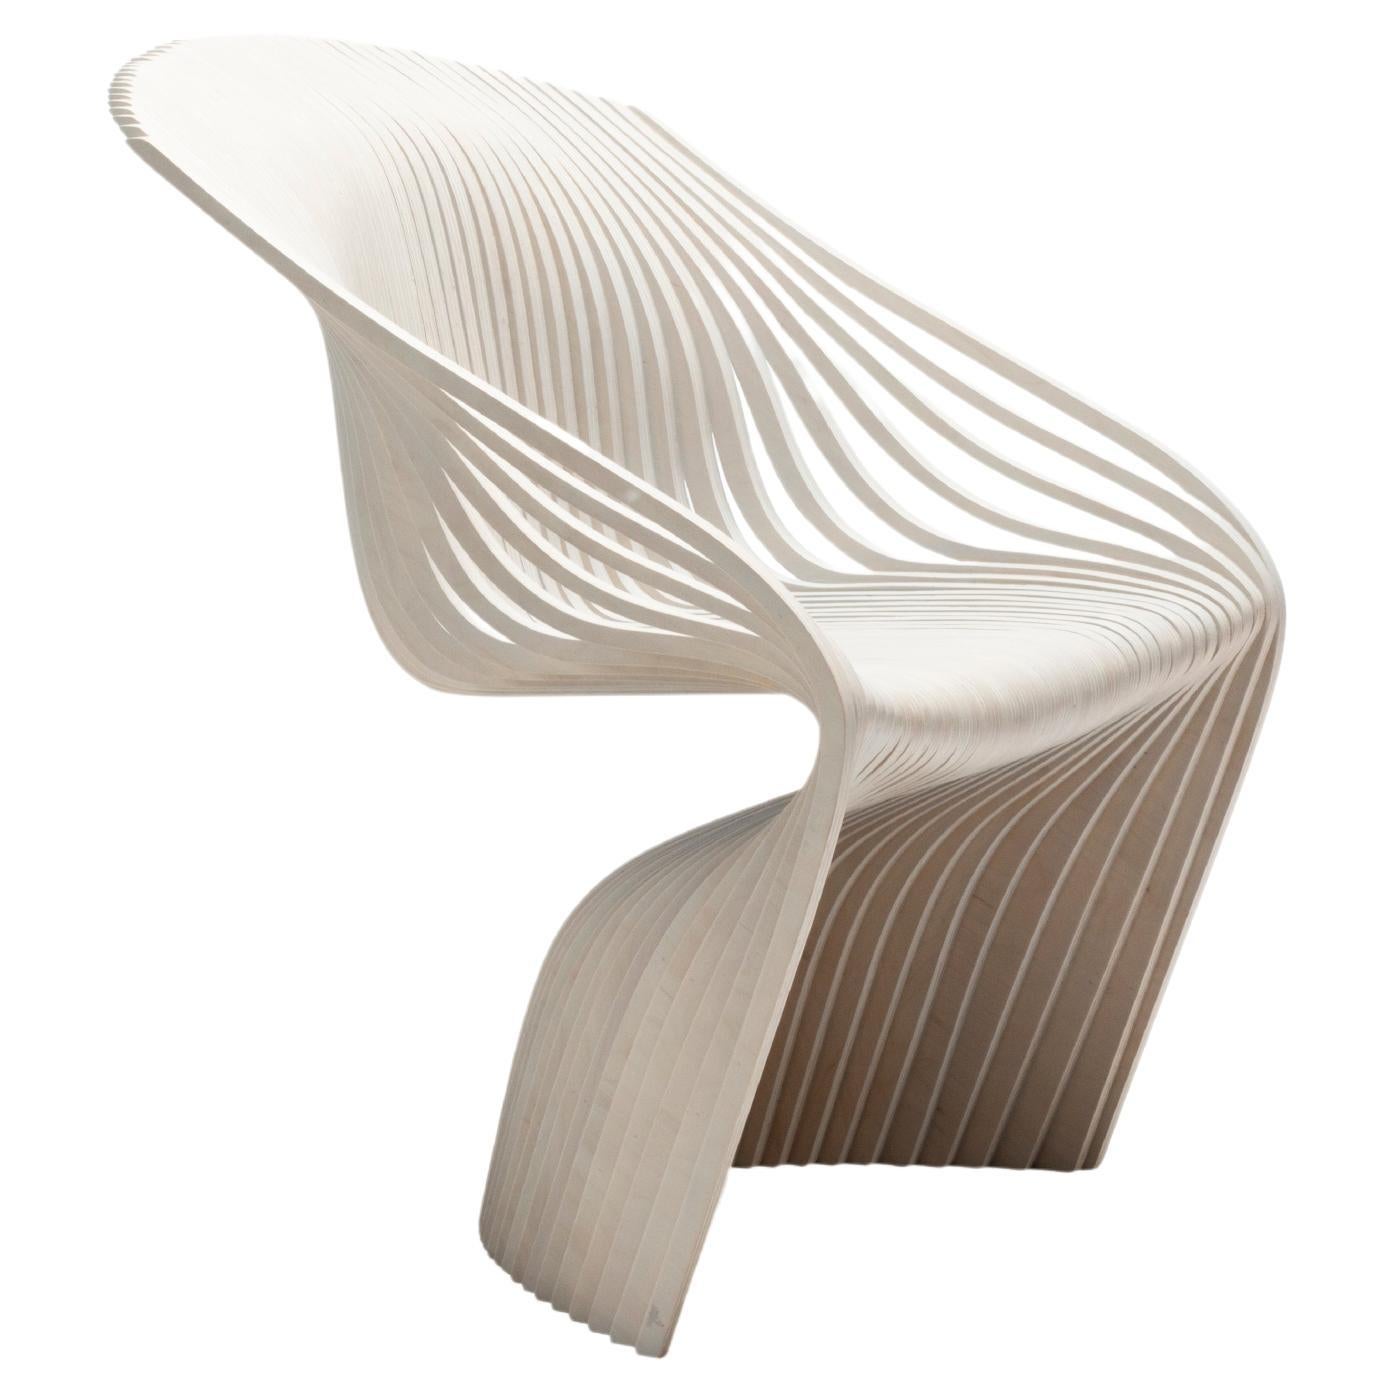 Aida Chair by Piegatto, a Sculptural Contemporary Chair  For Sale